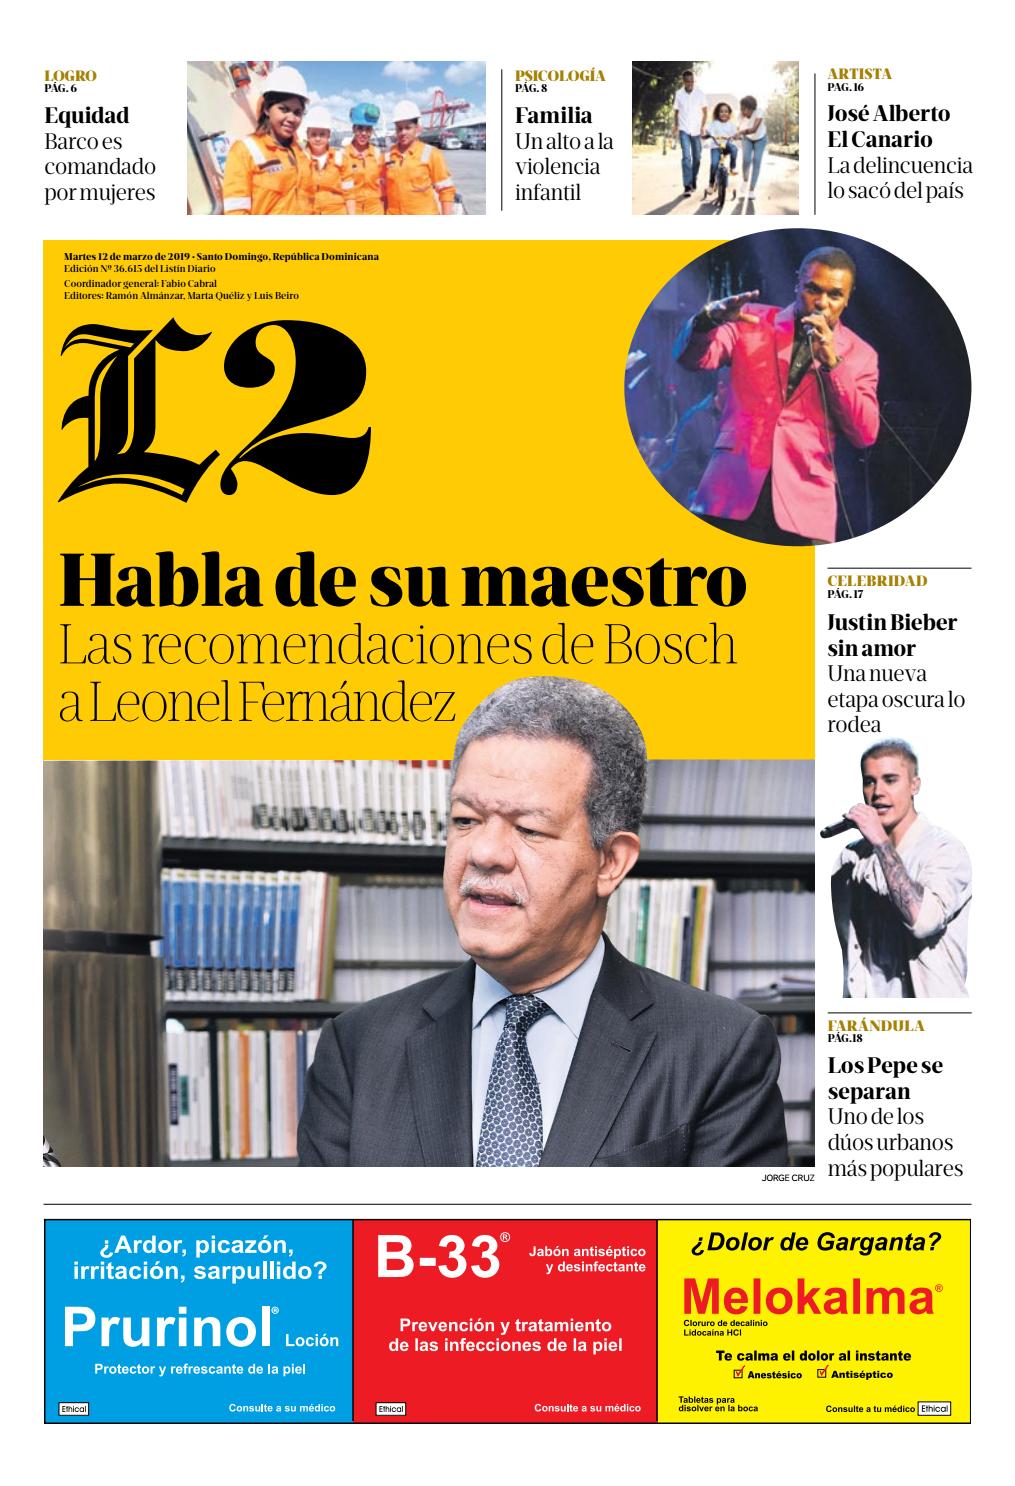 Portada Periódico Listín Diario – Sección L2, Martes 12 de Marzo 2019